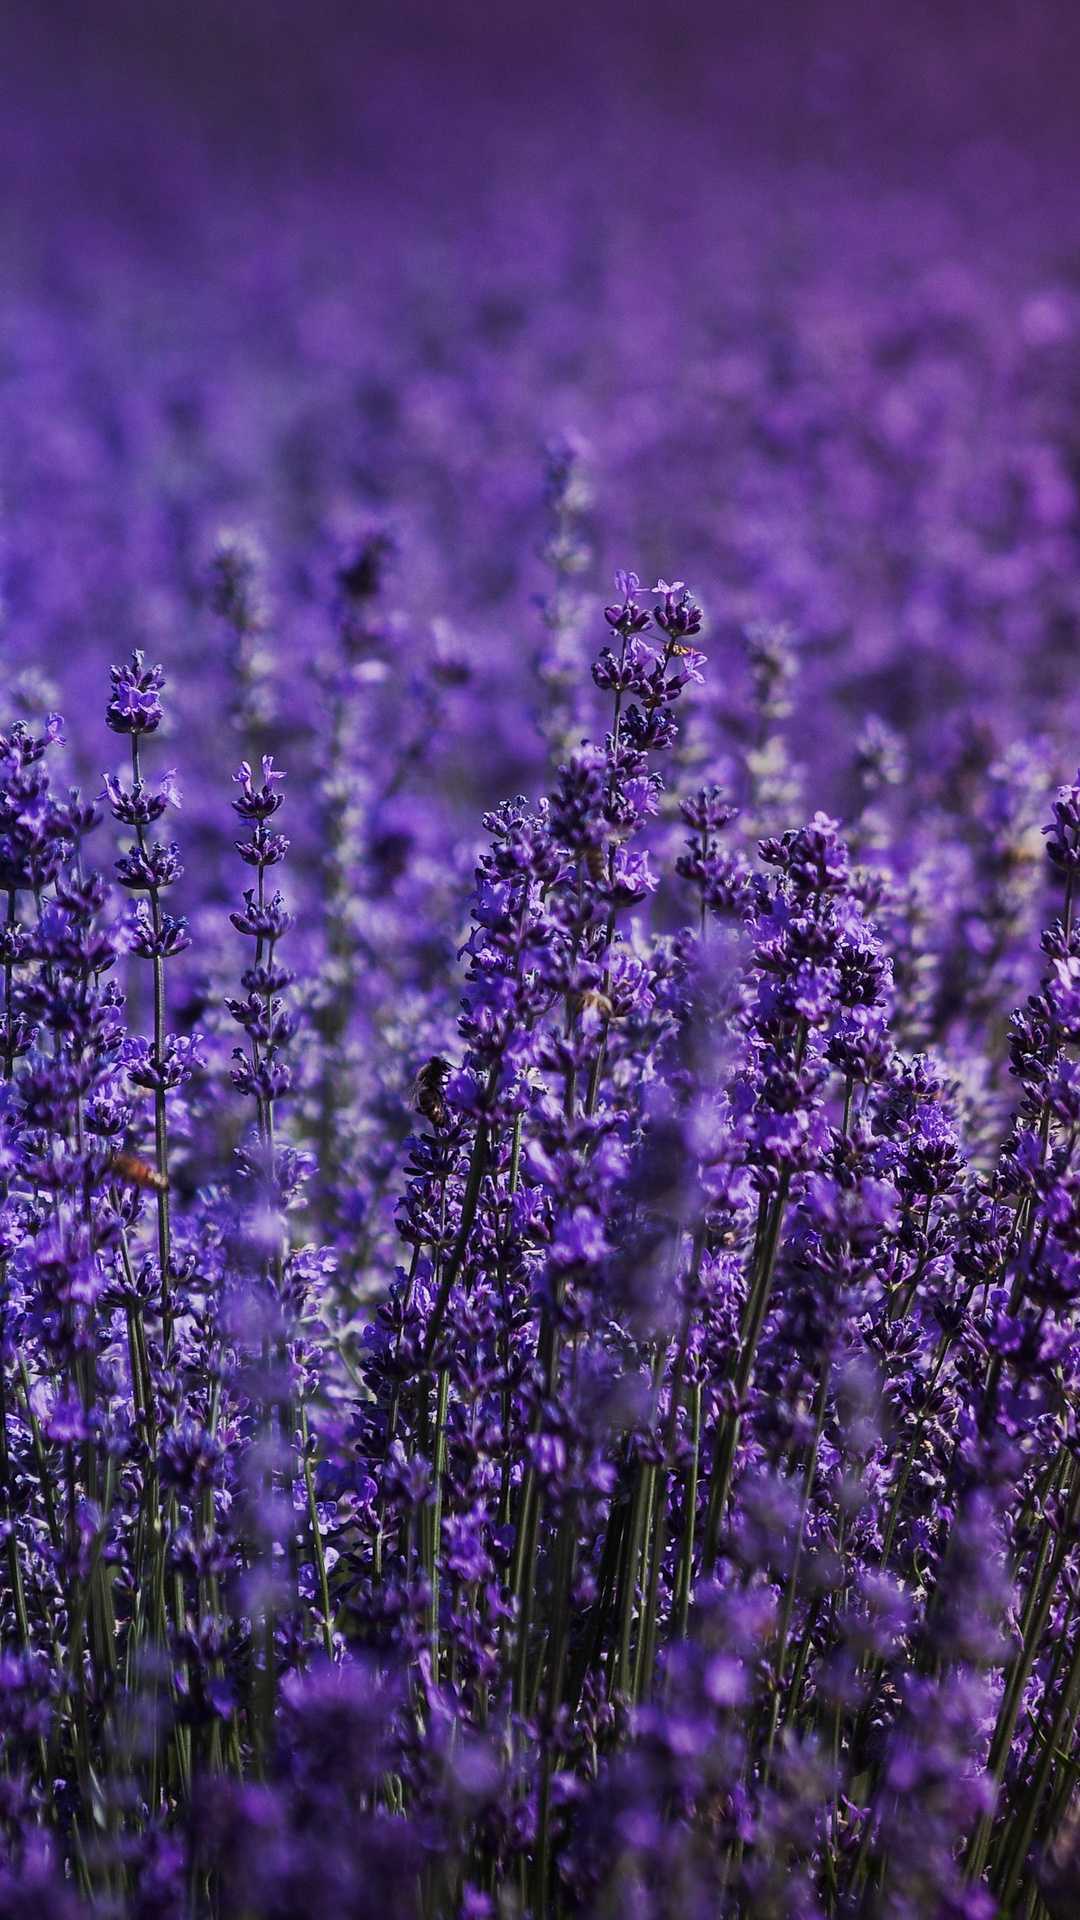 Lavender fields in the purple mountains - Lavender, garden